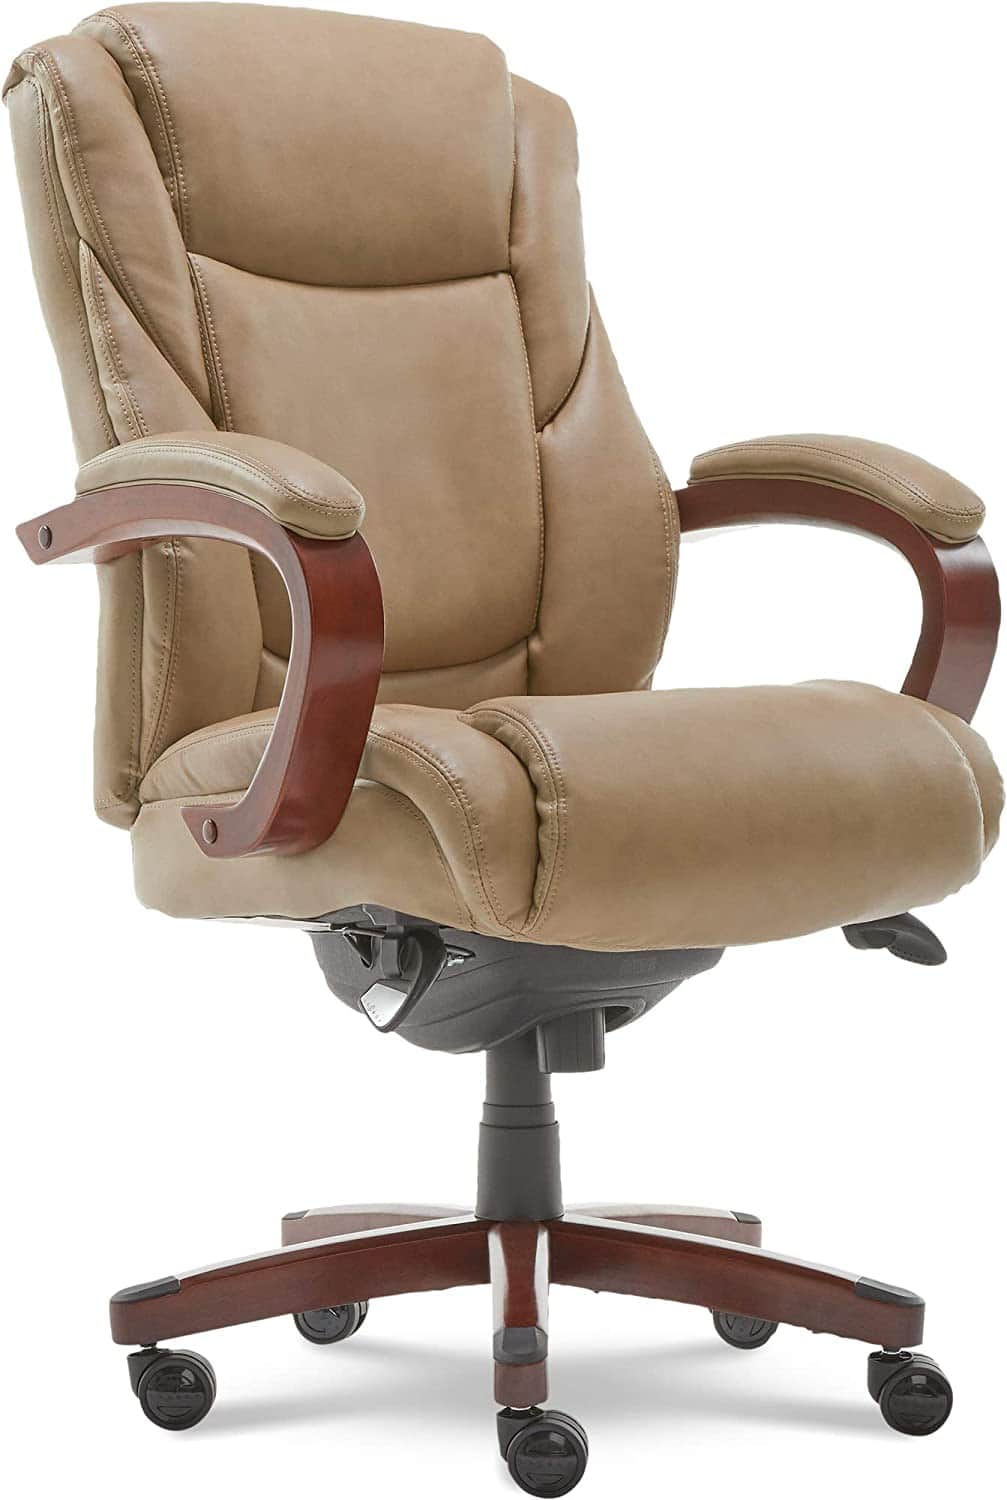 La-Z-Boy Miramar Executive Bonded Leather Office Chair 